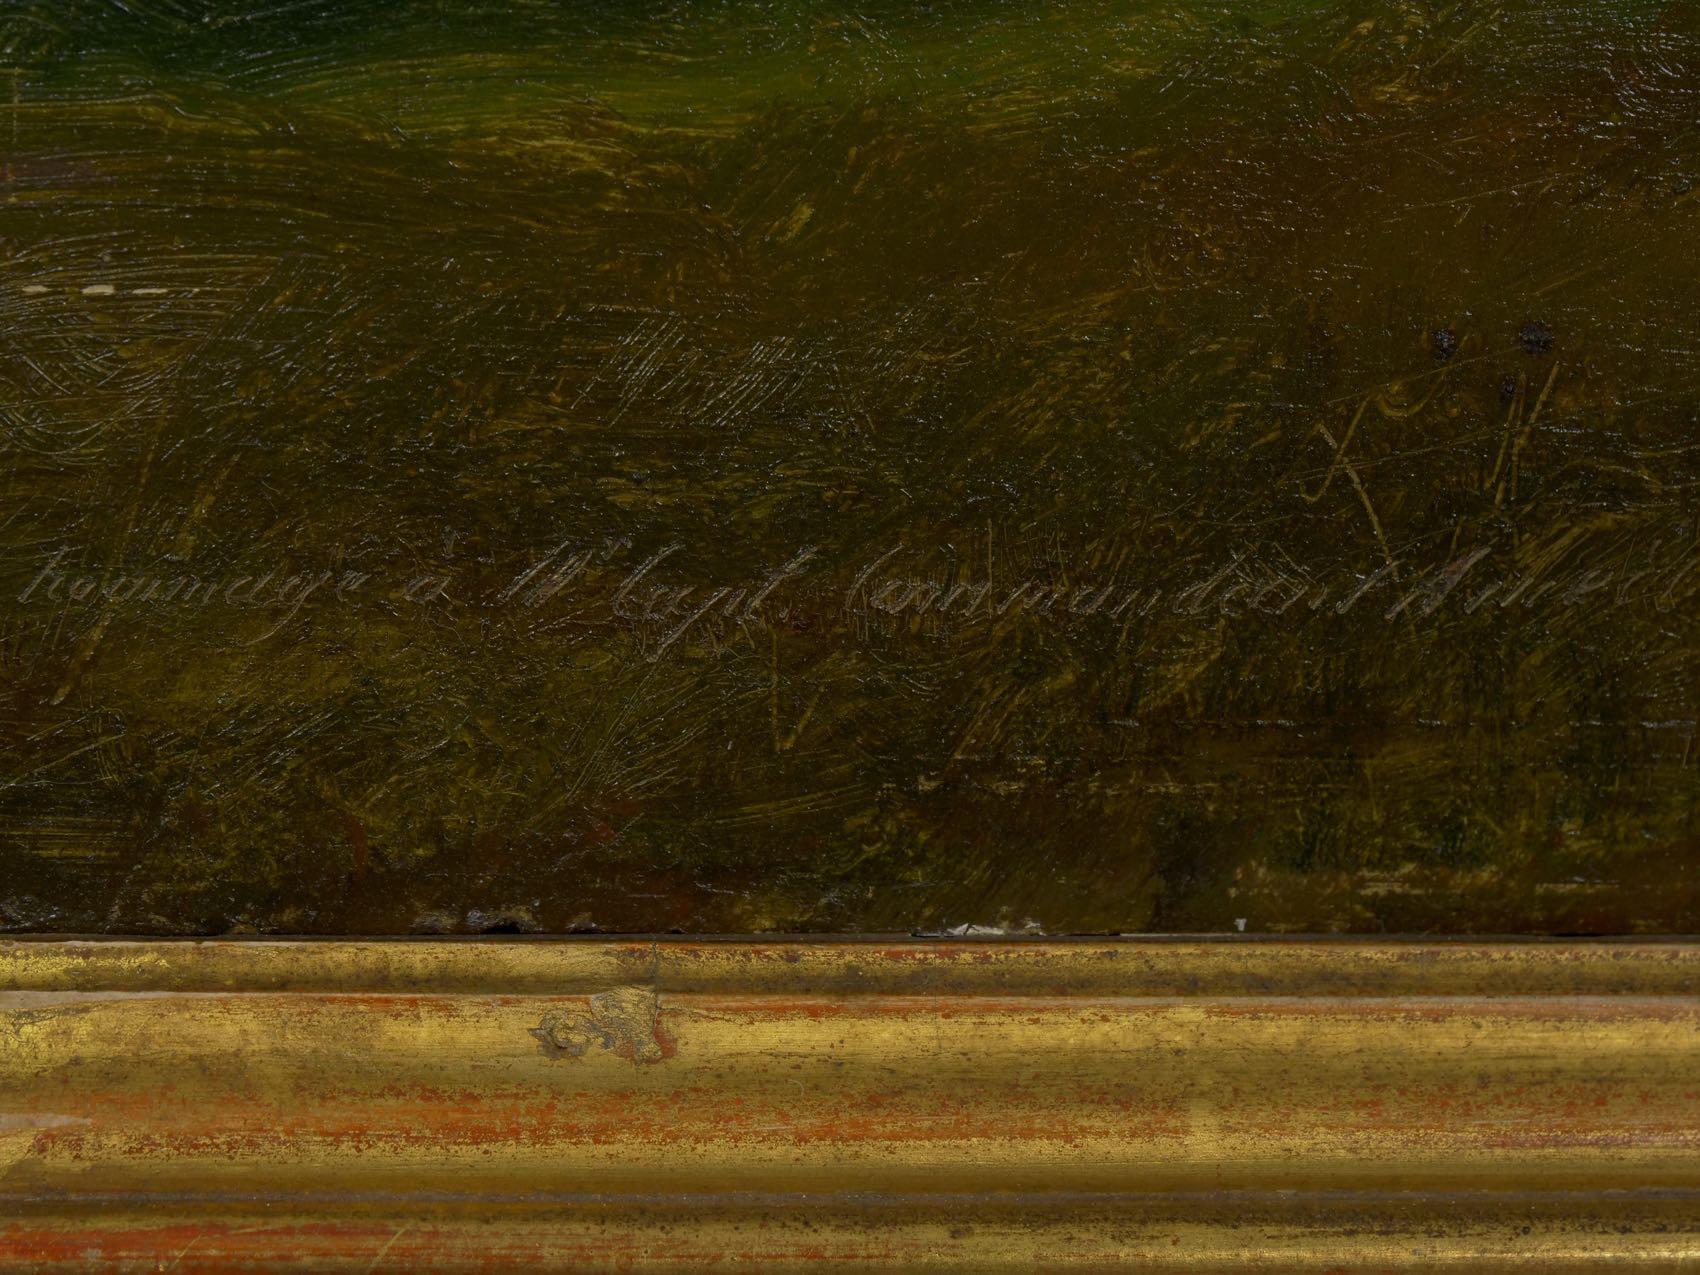 John Lewis Shonborn (American, 1852-1931) Equestrian Thoroughbred Oil Painting 5